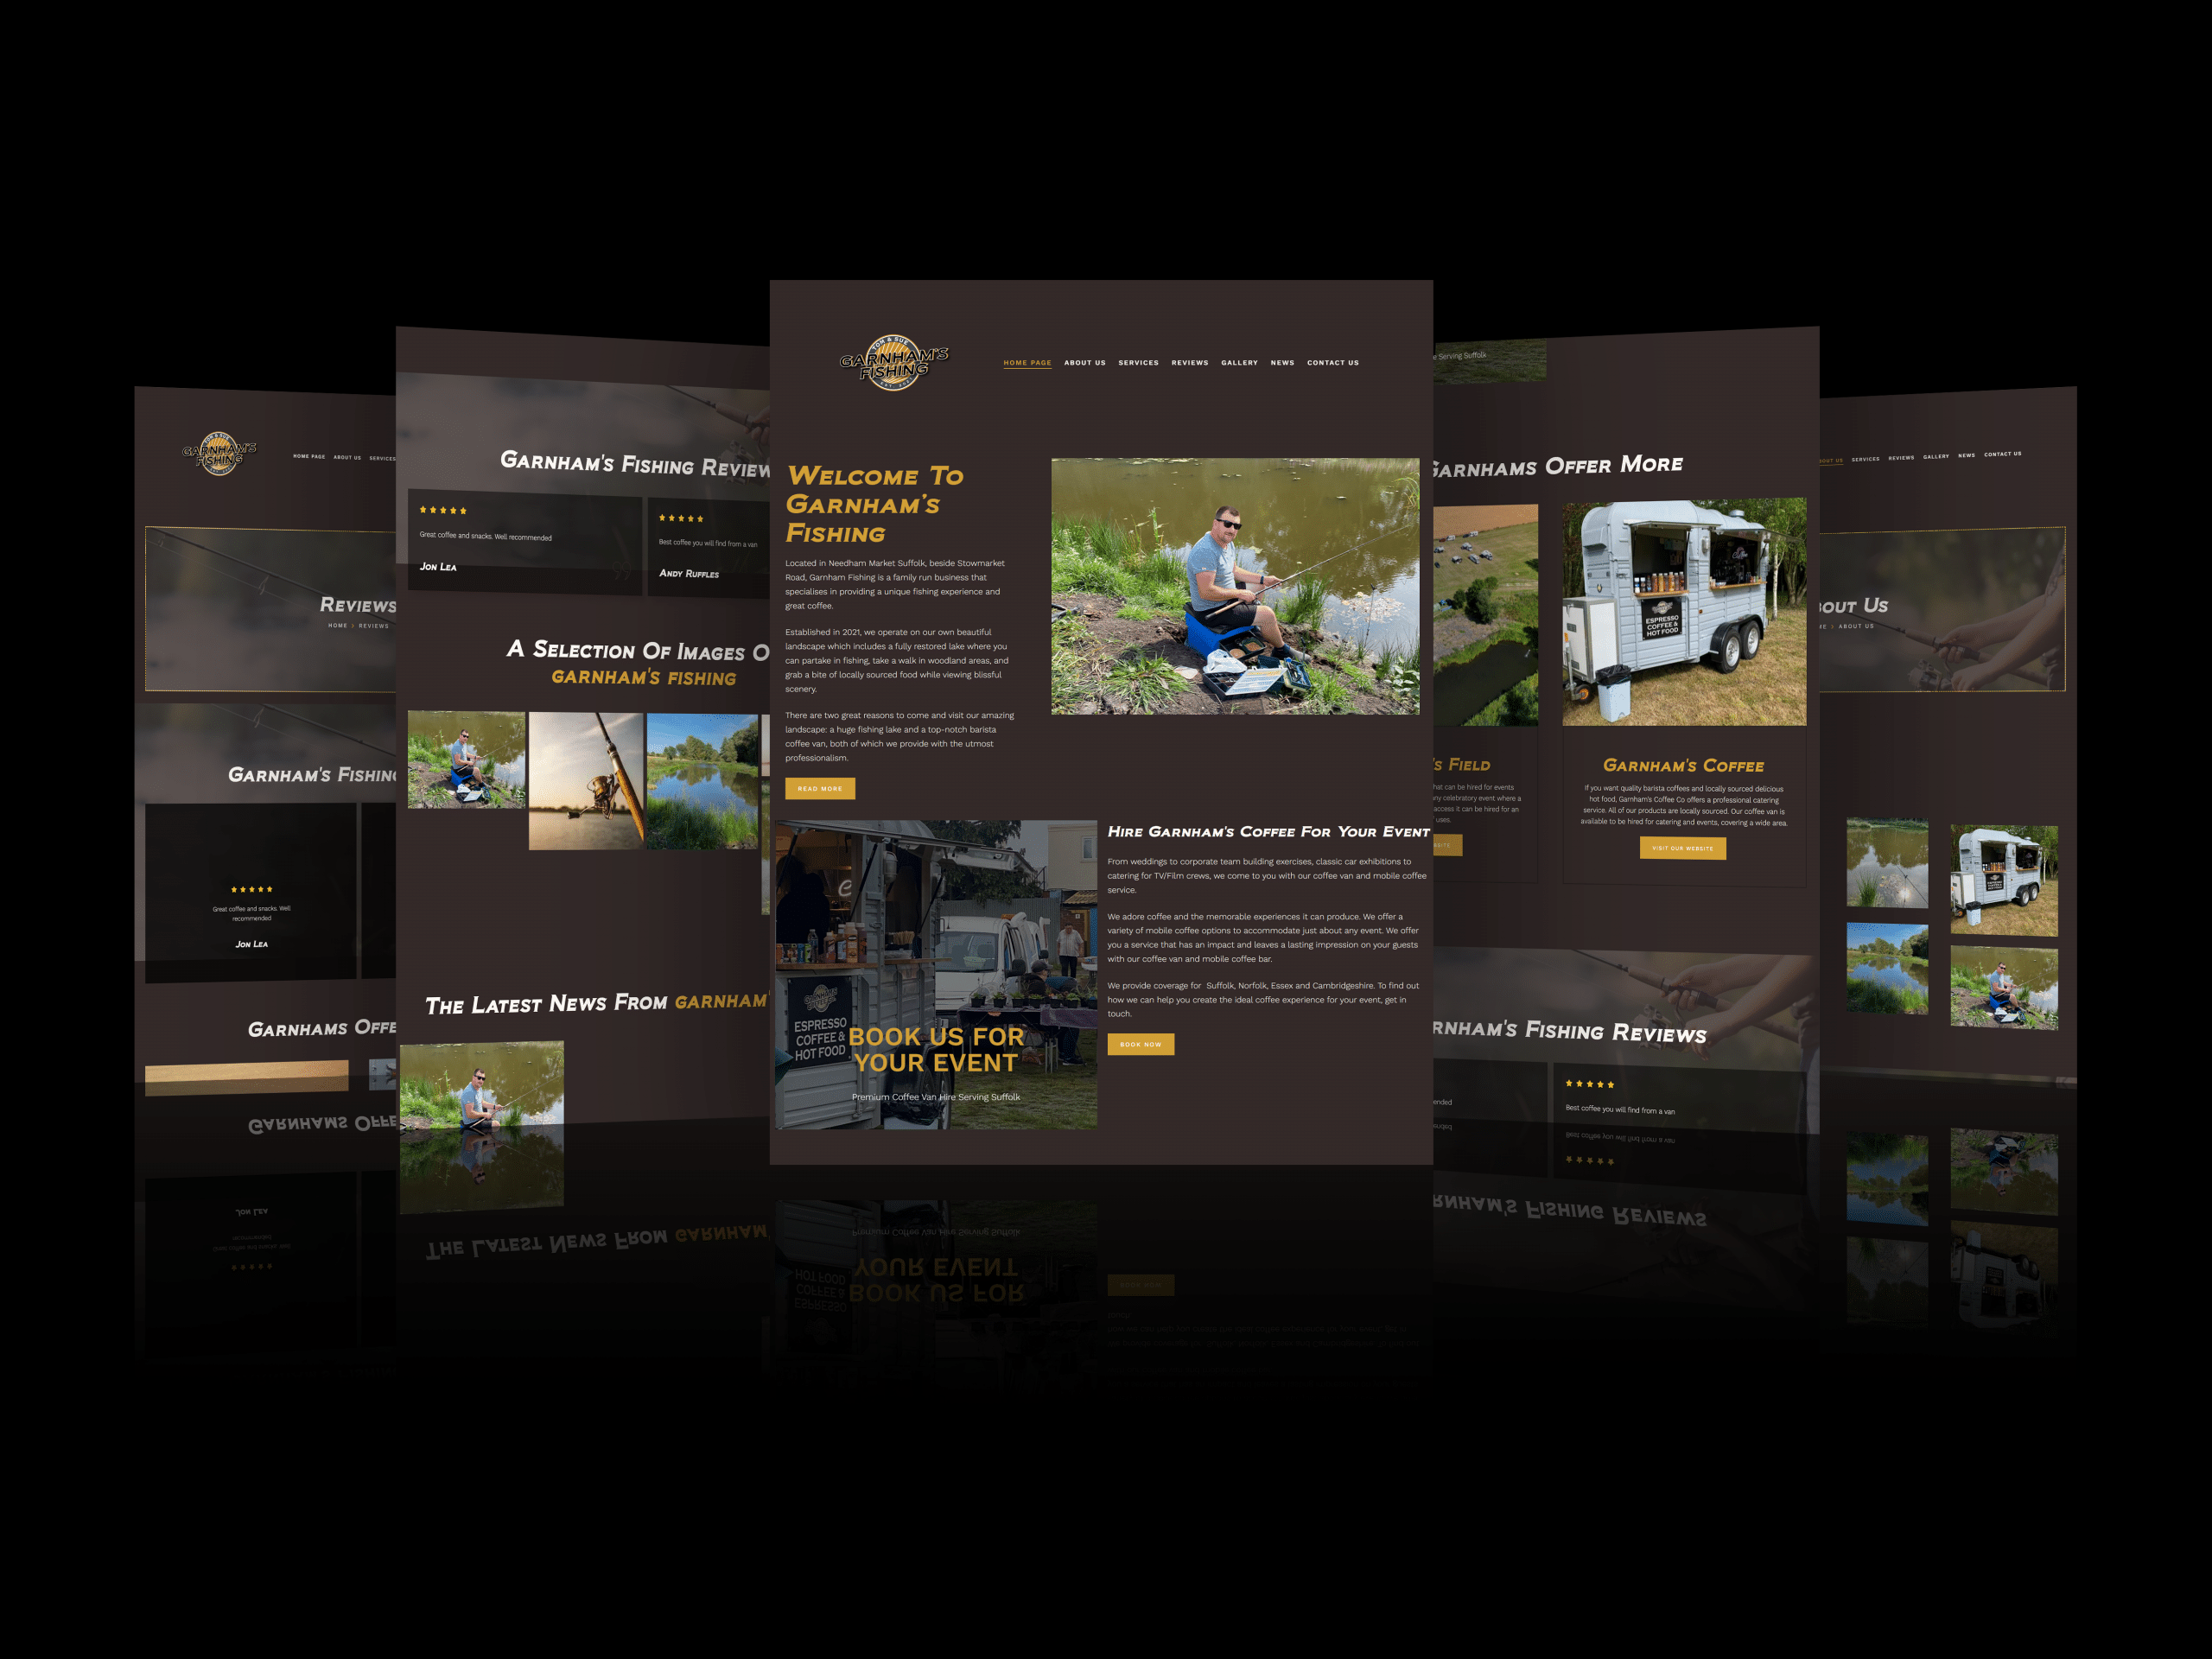 Re-designed Garnham’s Fishing Website Launched